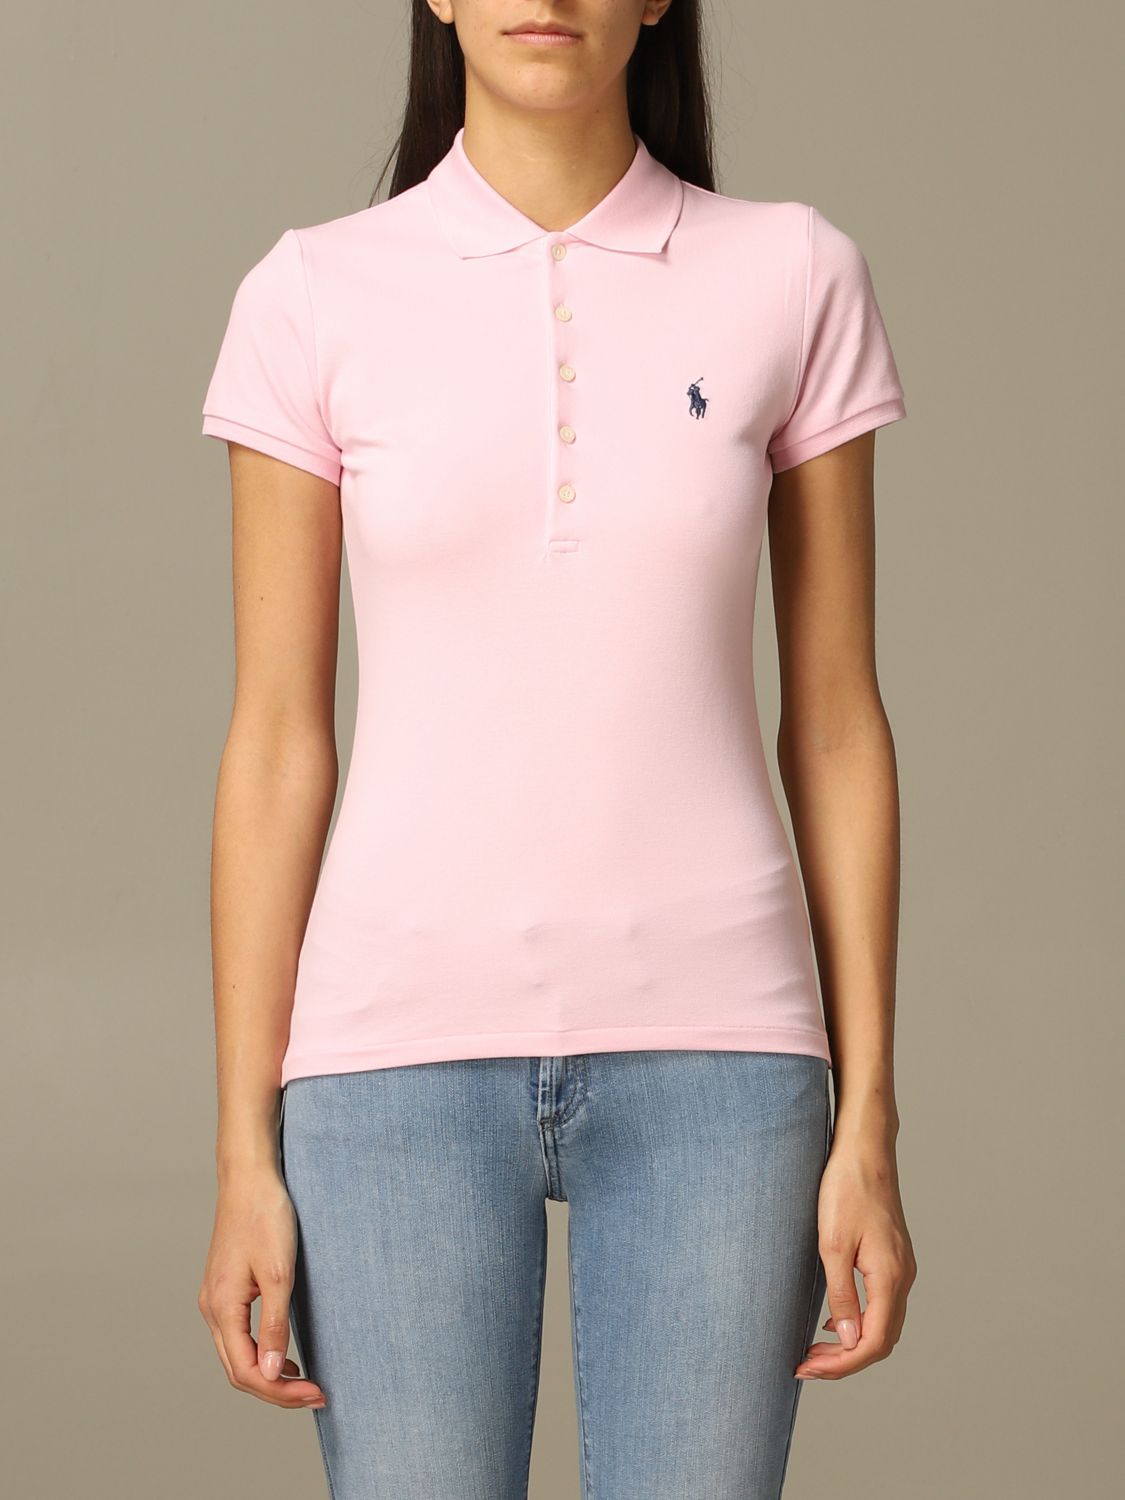 POLO RALPH LAUREN: polo shirt for women - Pink | Polo Ralph Lauren polo  shirt 211505654 online on 